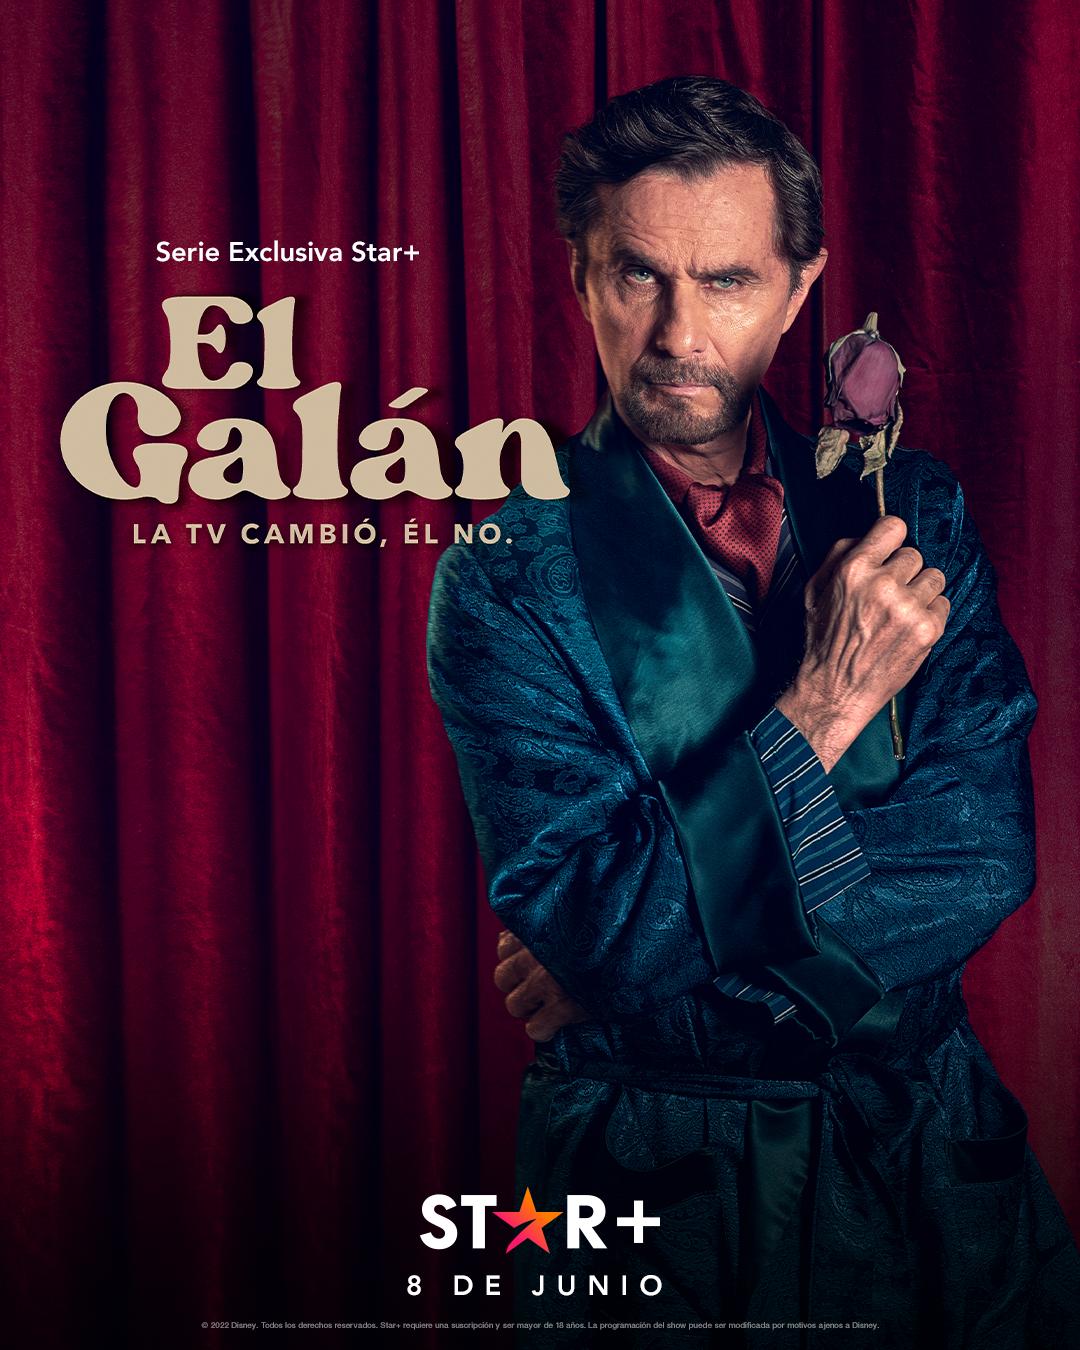 TV ratings for The Gallant. TV Changed, He Didn't (El Galán. La Tv Cambió, Él No) in Irlanda. Star+ TV series